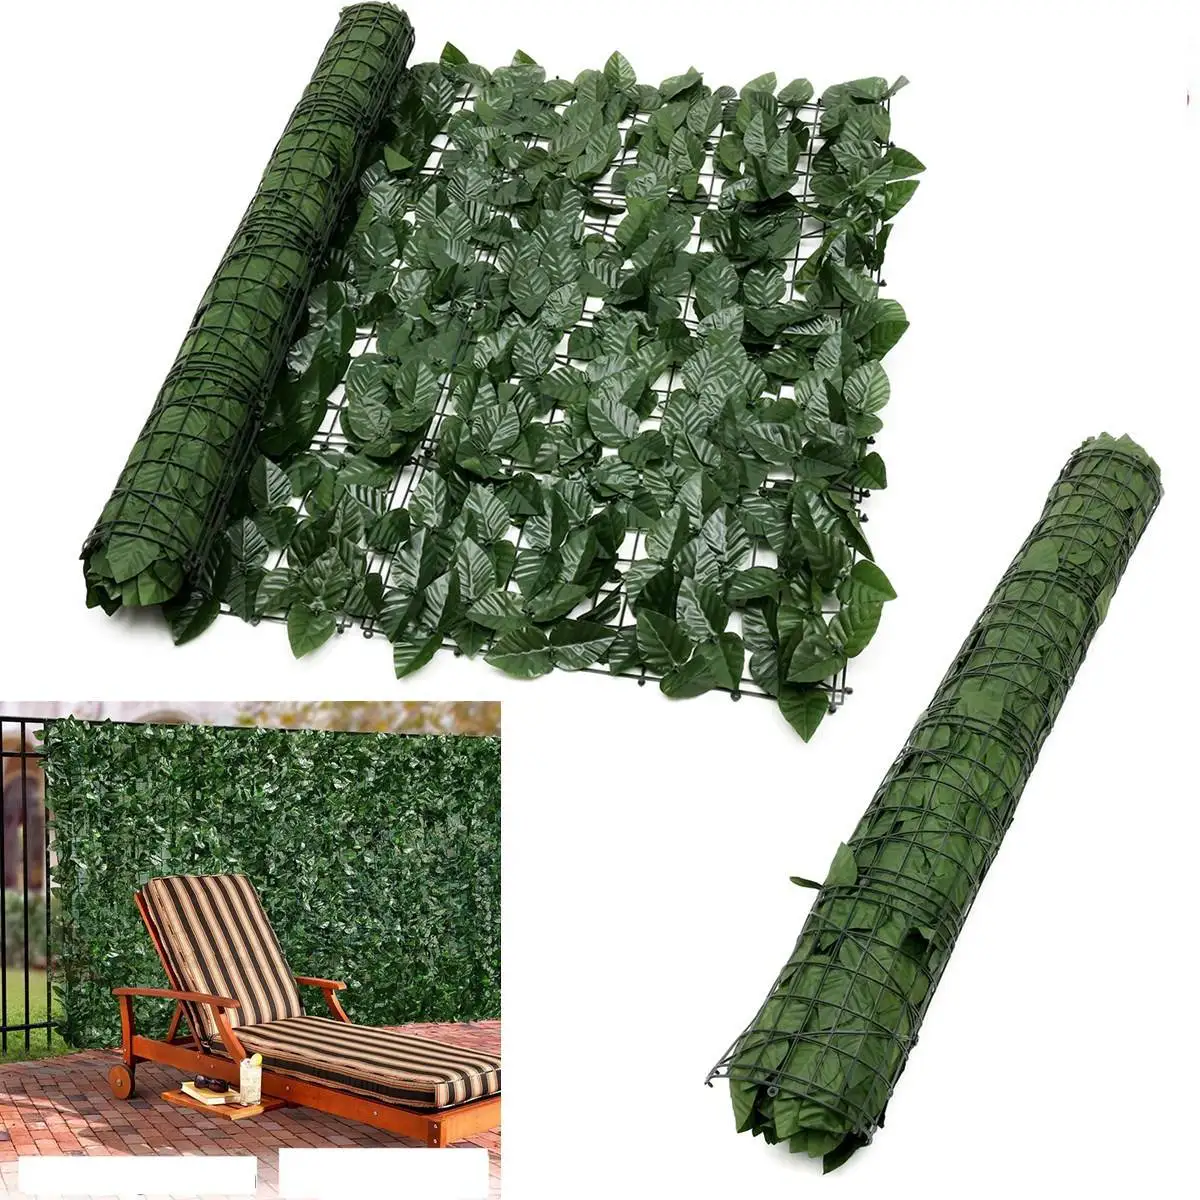 

1x3M Plant Wall Artificial Lawn Boxwood Hedge Garden Backyard Home Decor Simulation Grass Turf Rug Lawn Outdoor Flower wall